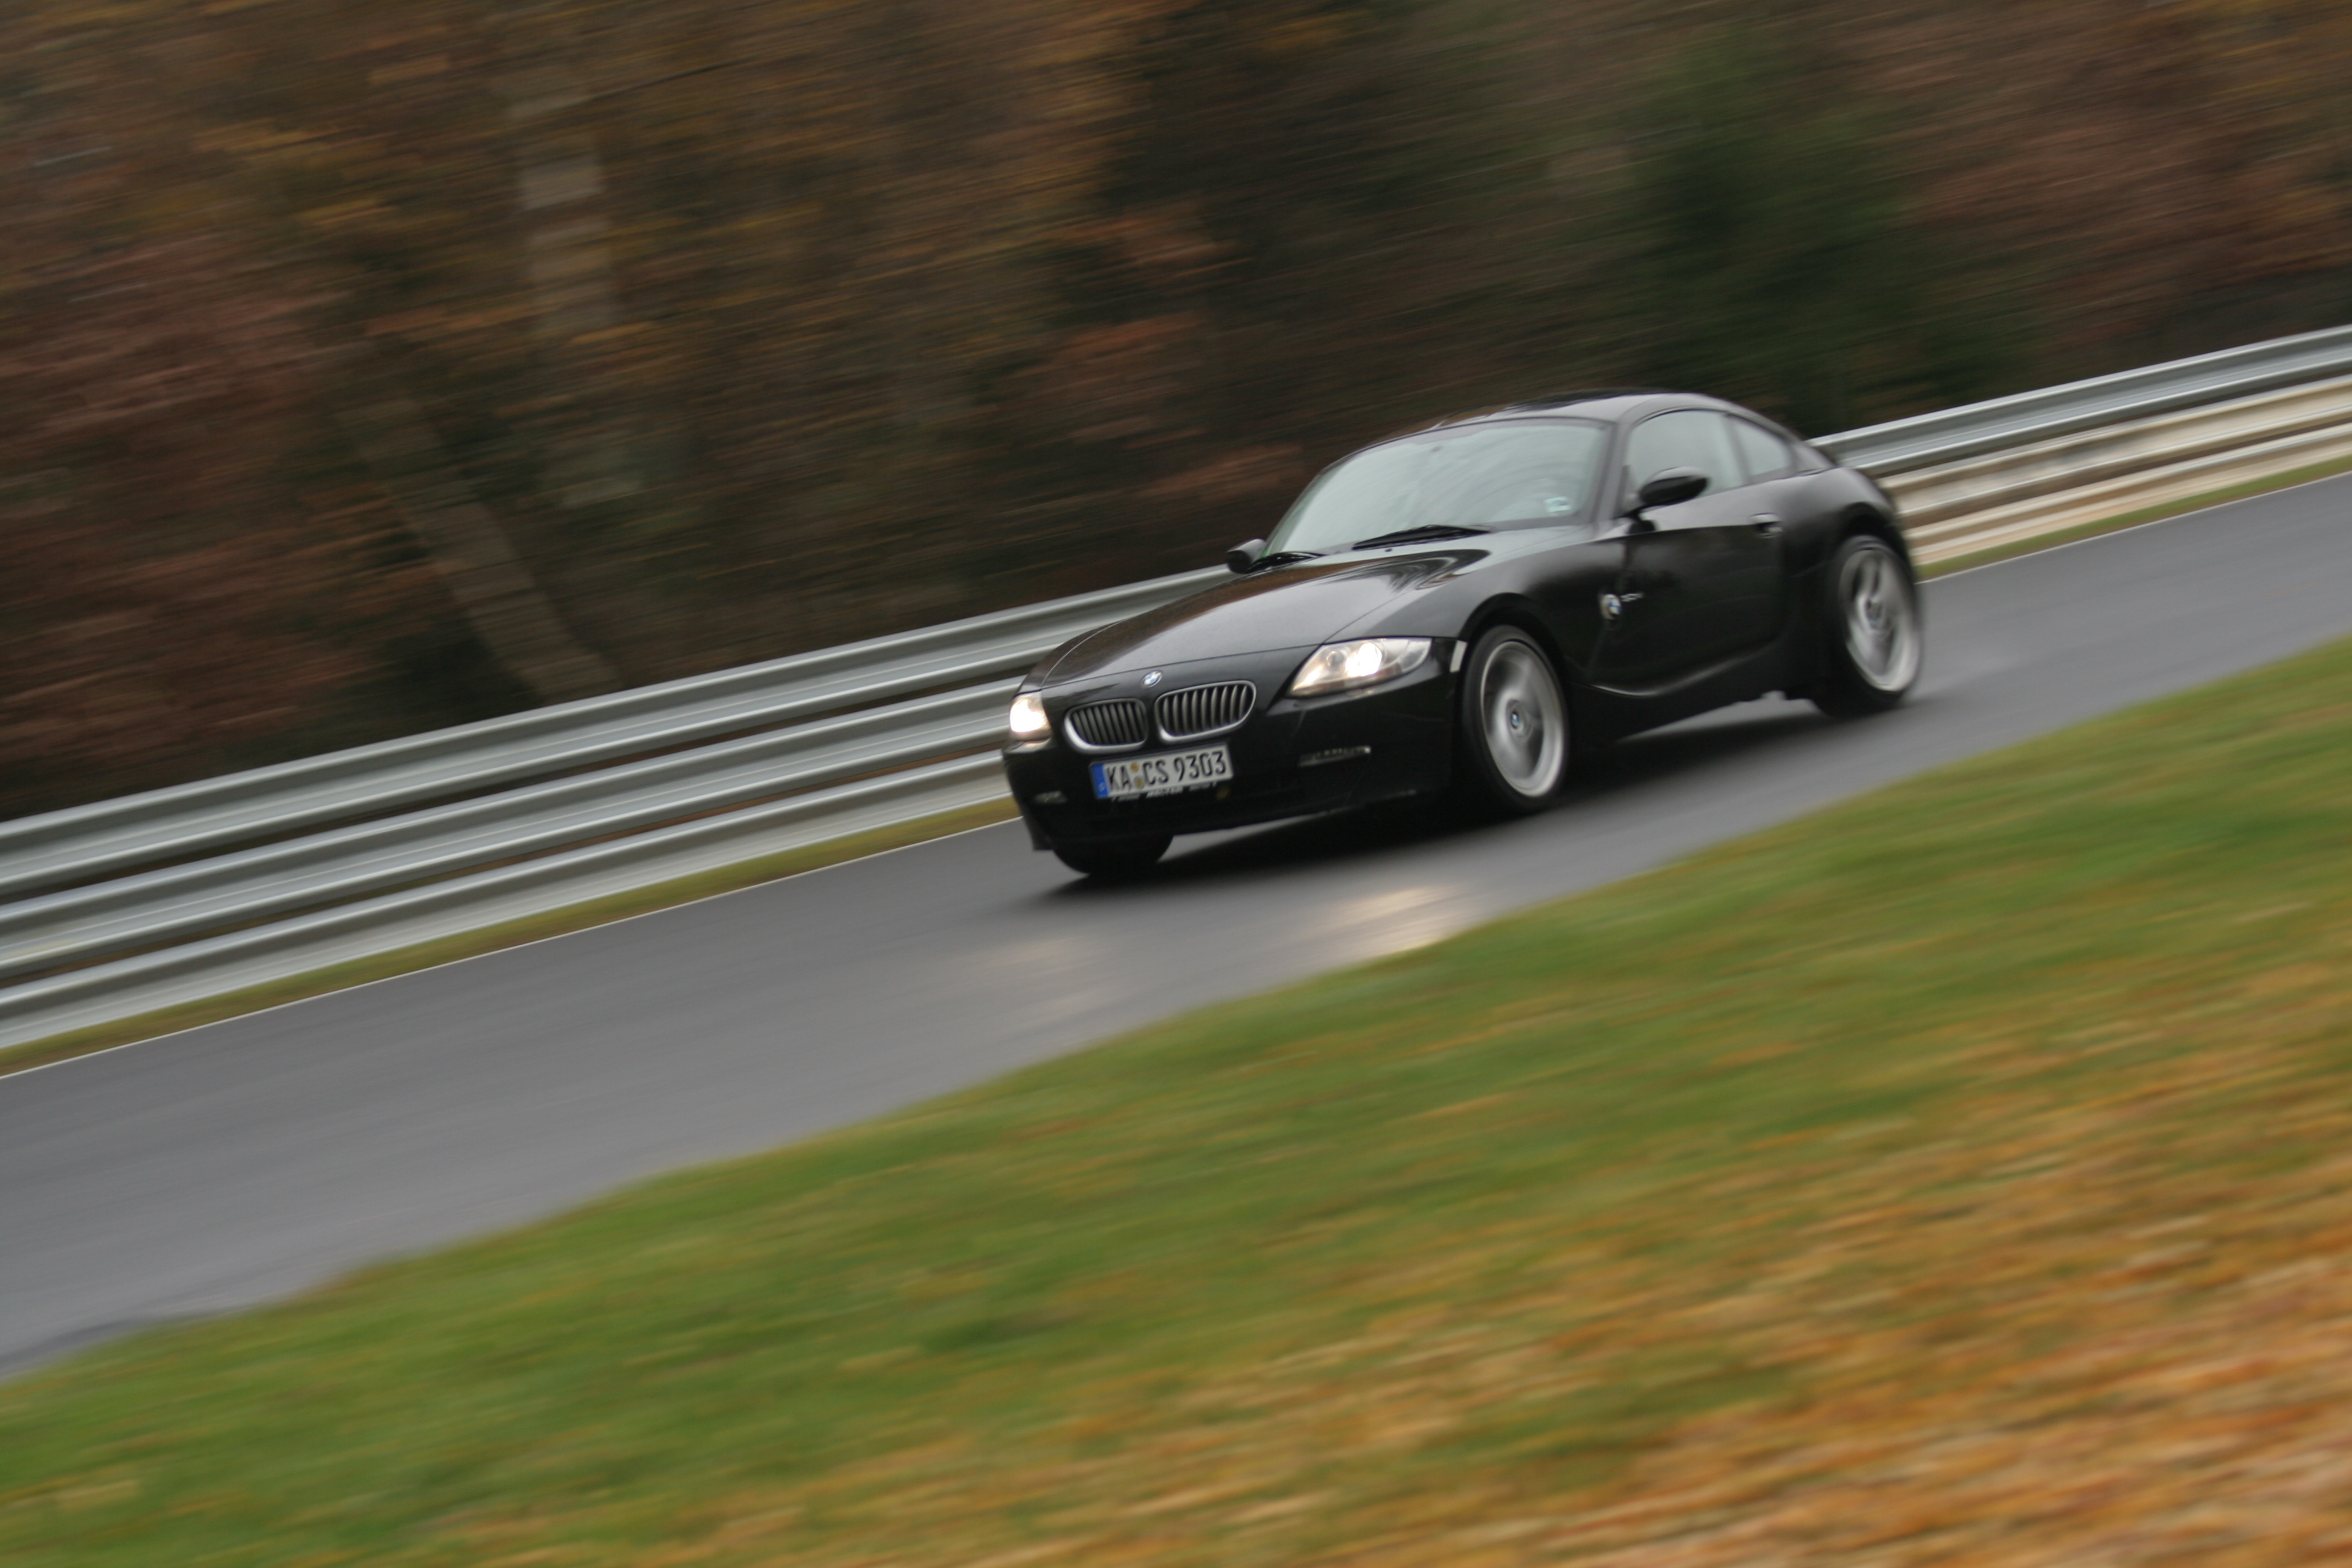 BMW Z4 Coupe Alpina - Nordschleife Plantzgarten I | Flickr - Photo ...